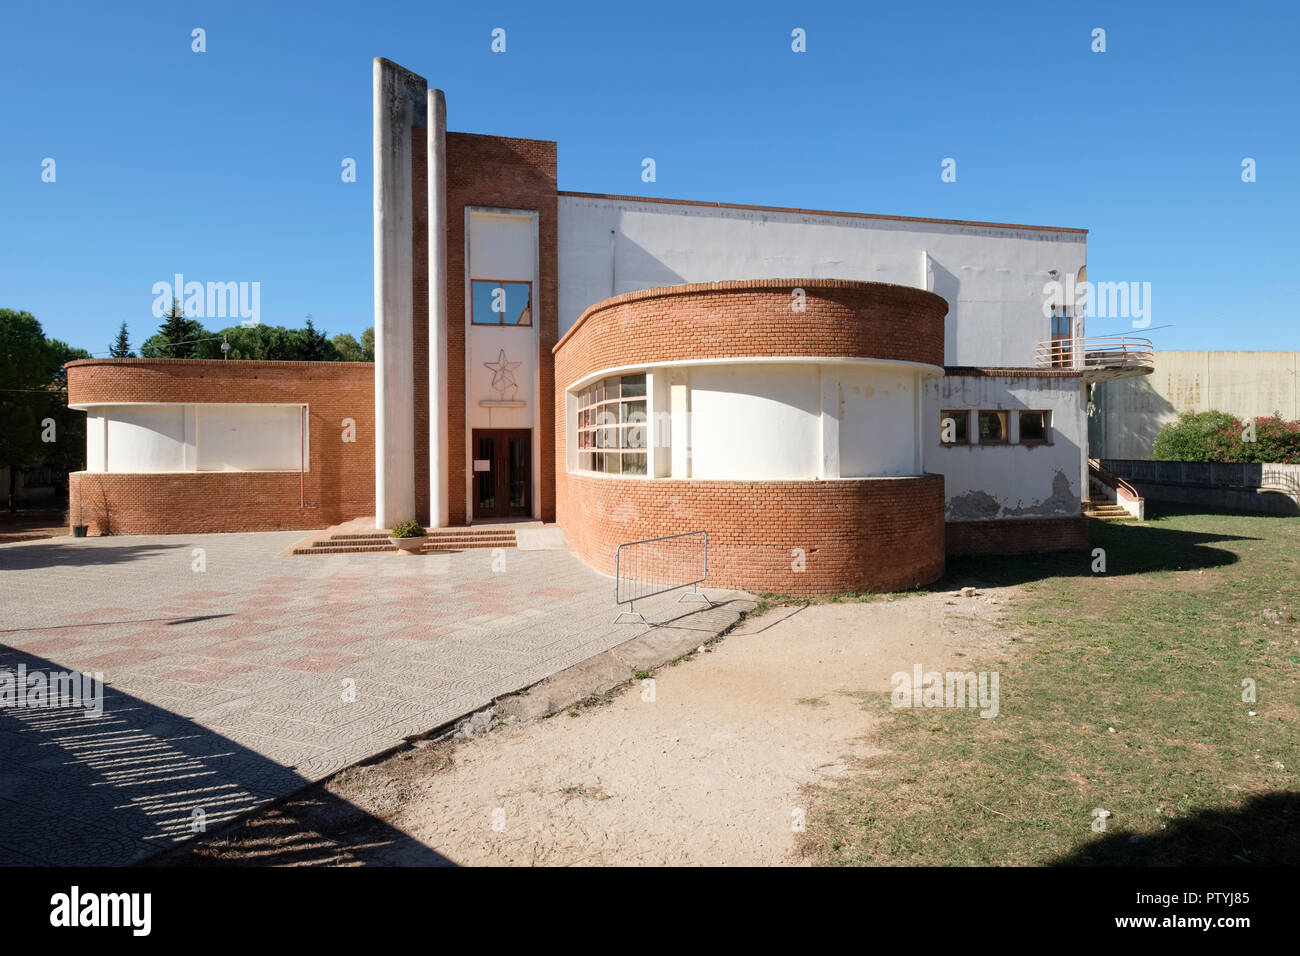 Fascist architecture, Italian rationalist style elementary school, 1936, Arturo Miraglia (Scuola elementare), Fertilia, Alghero, Sardinia, Italy Stock Photo